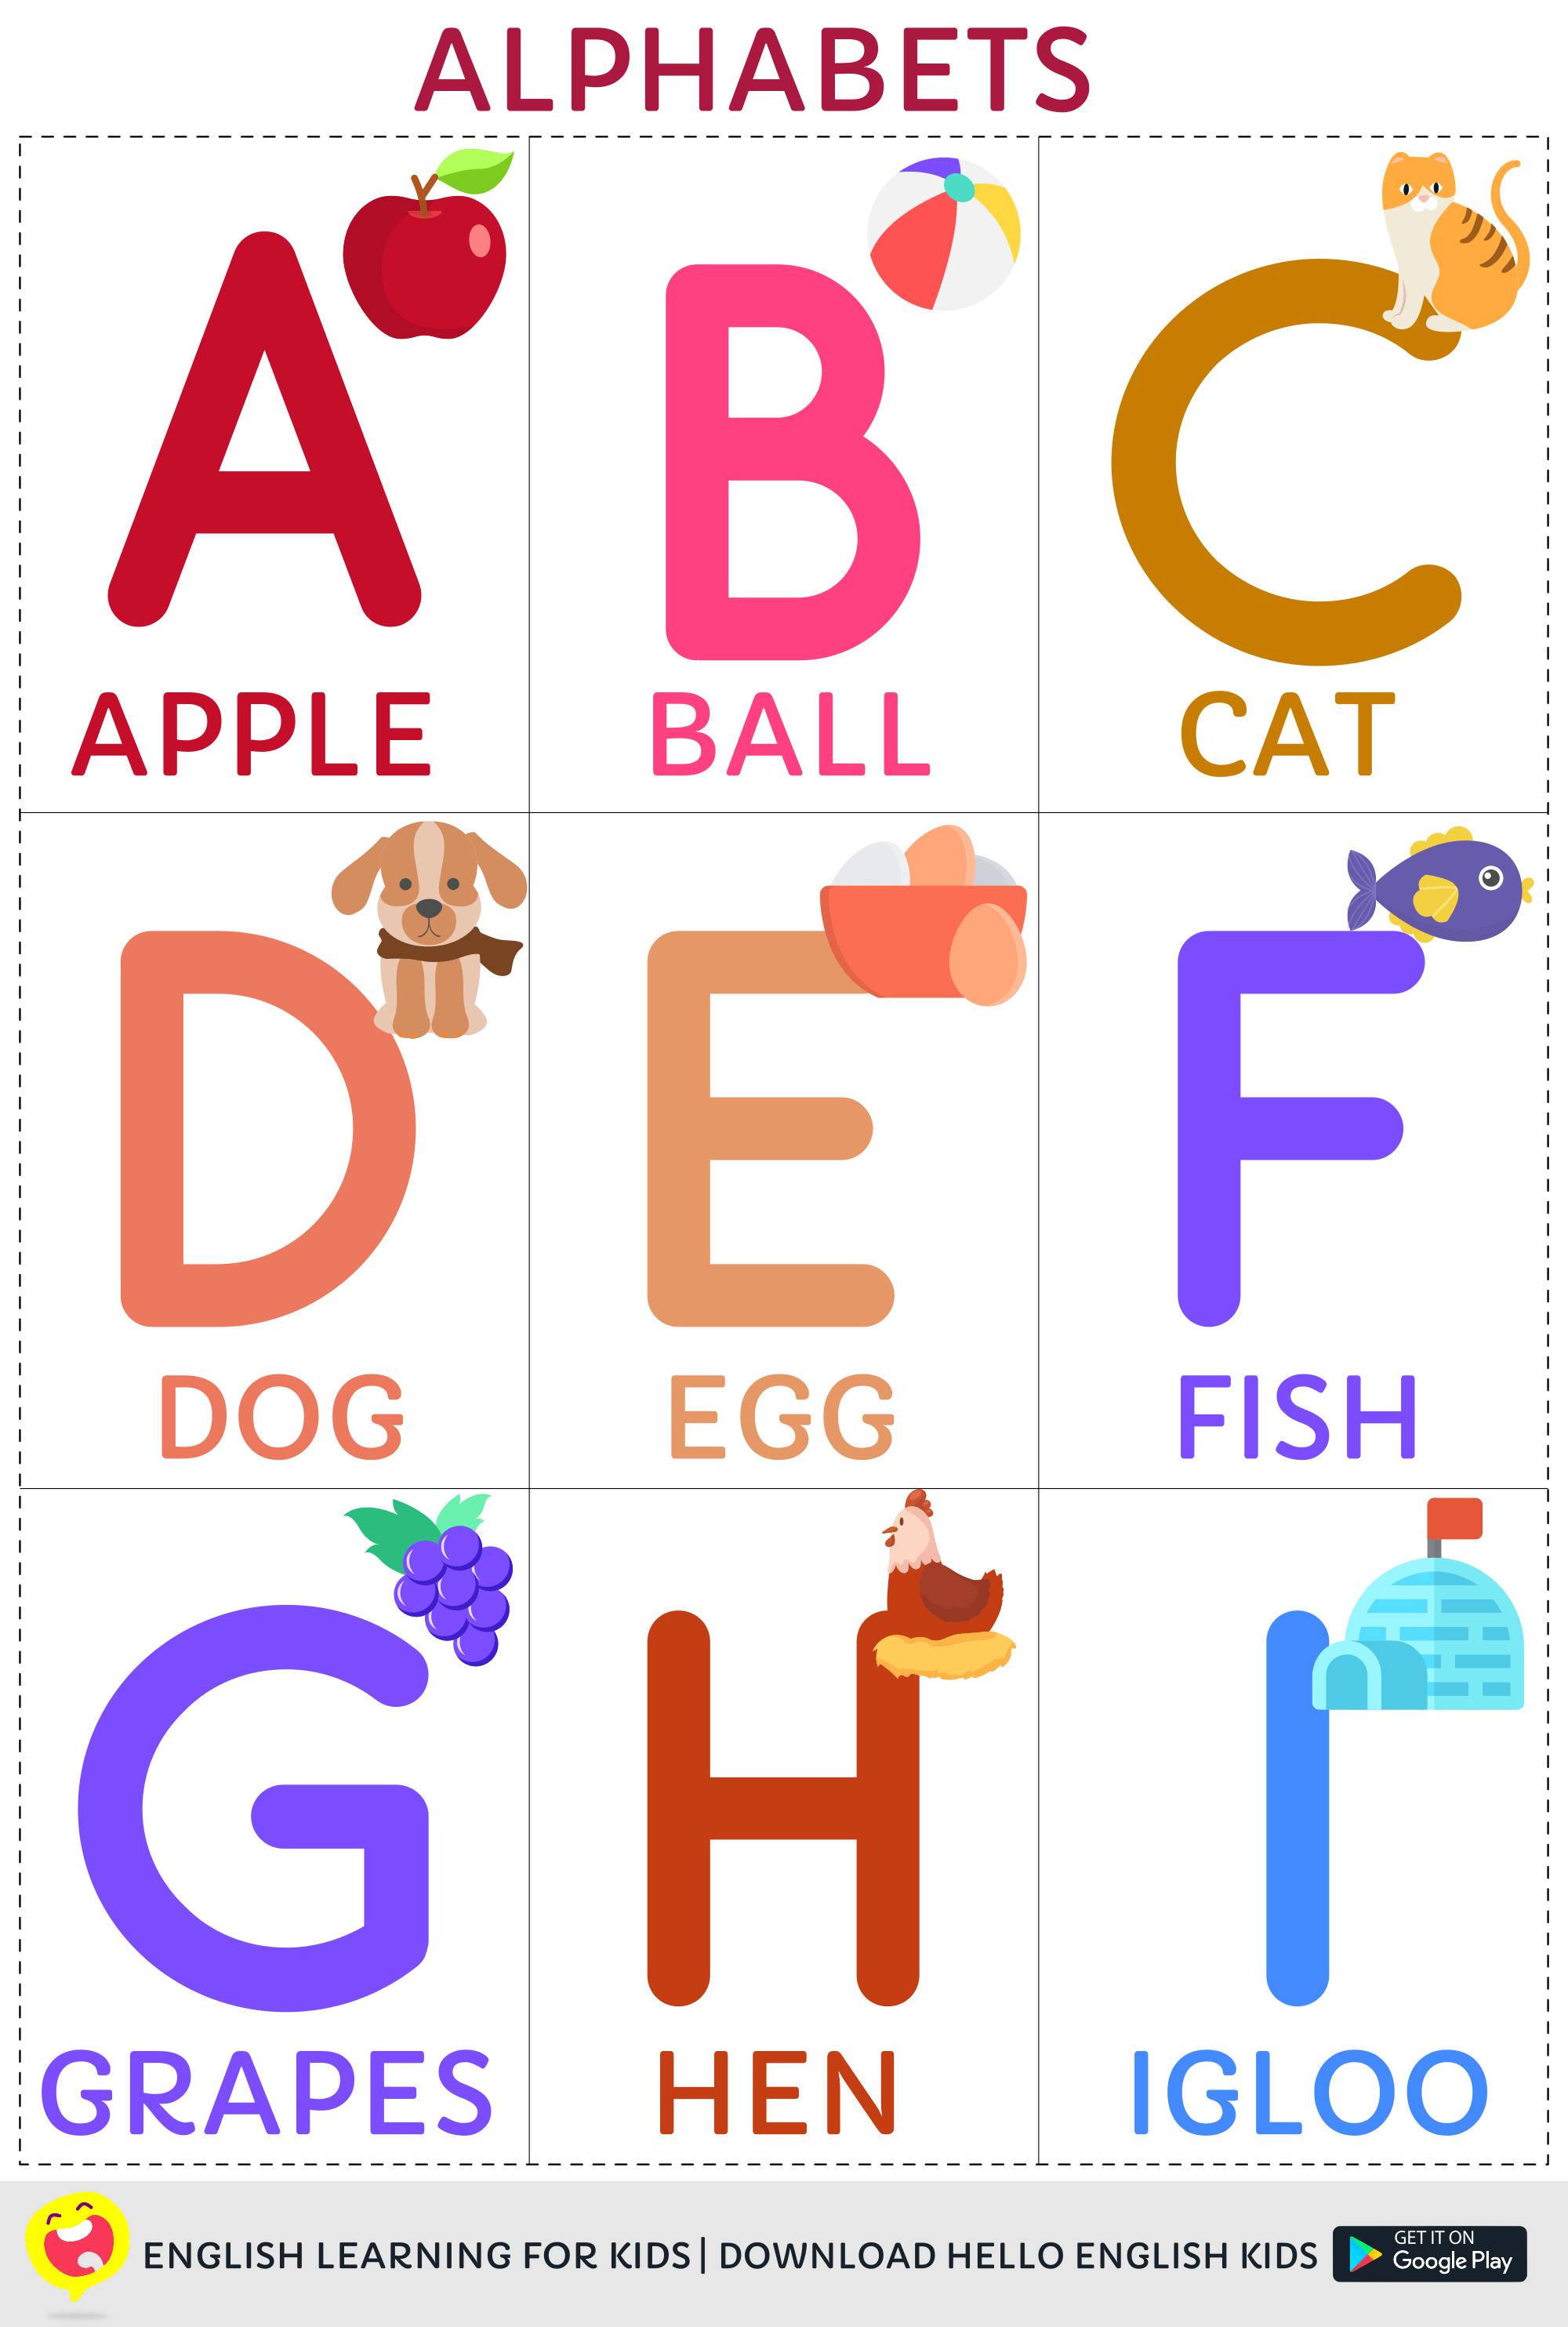 Hello English Kids Printable AZ Alphabets Kids App by